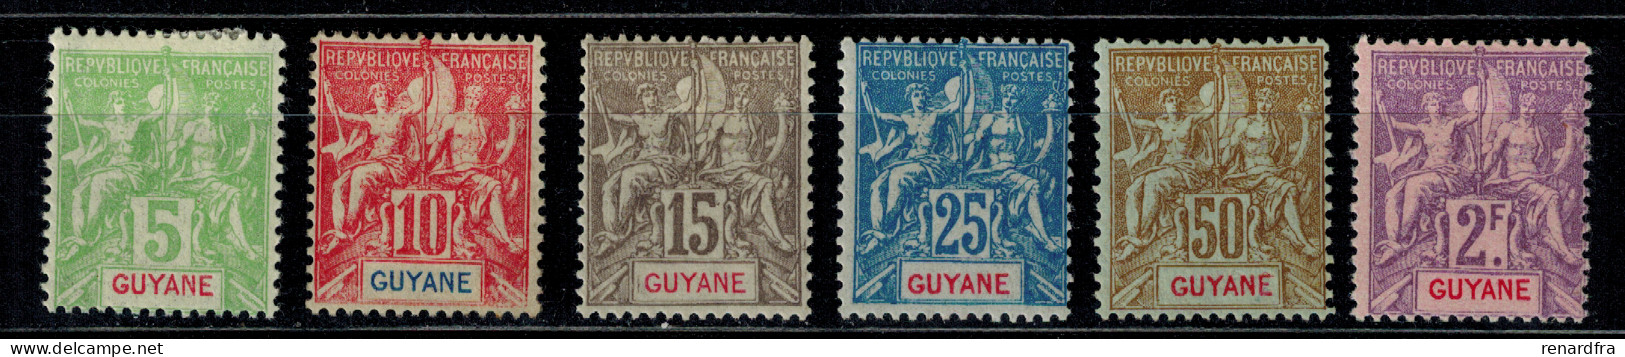 Timbres De Guyane N° 43, 44, 45, 46, 47, 48 Neuf * / MH - Ungebraucht